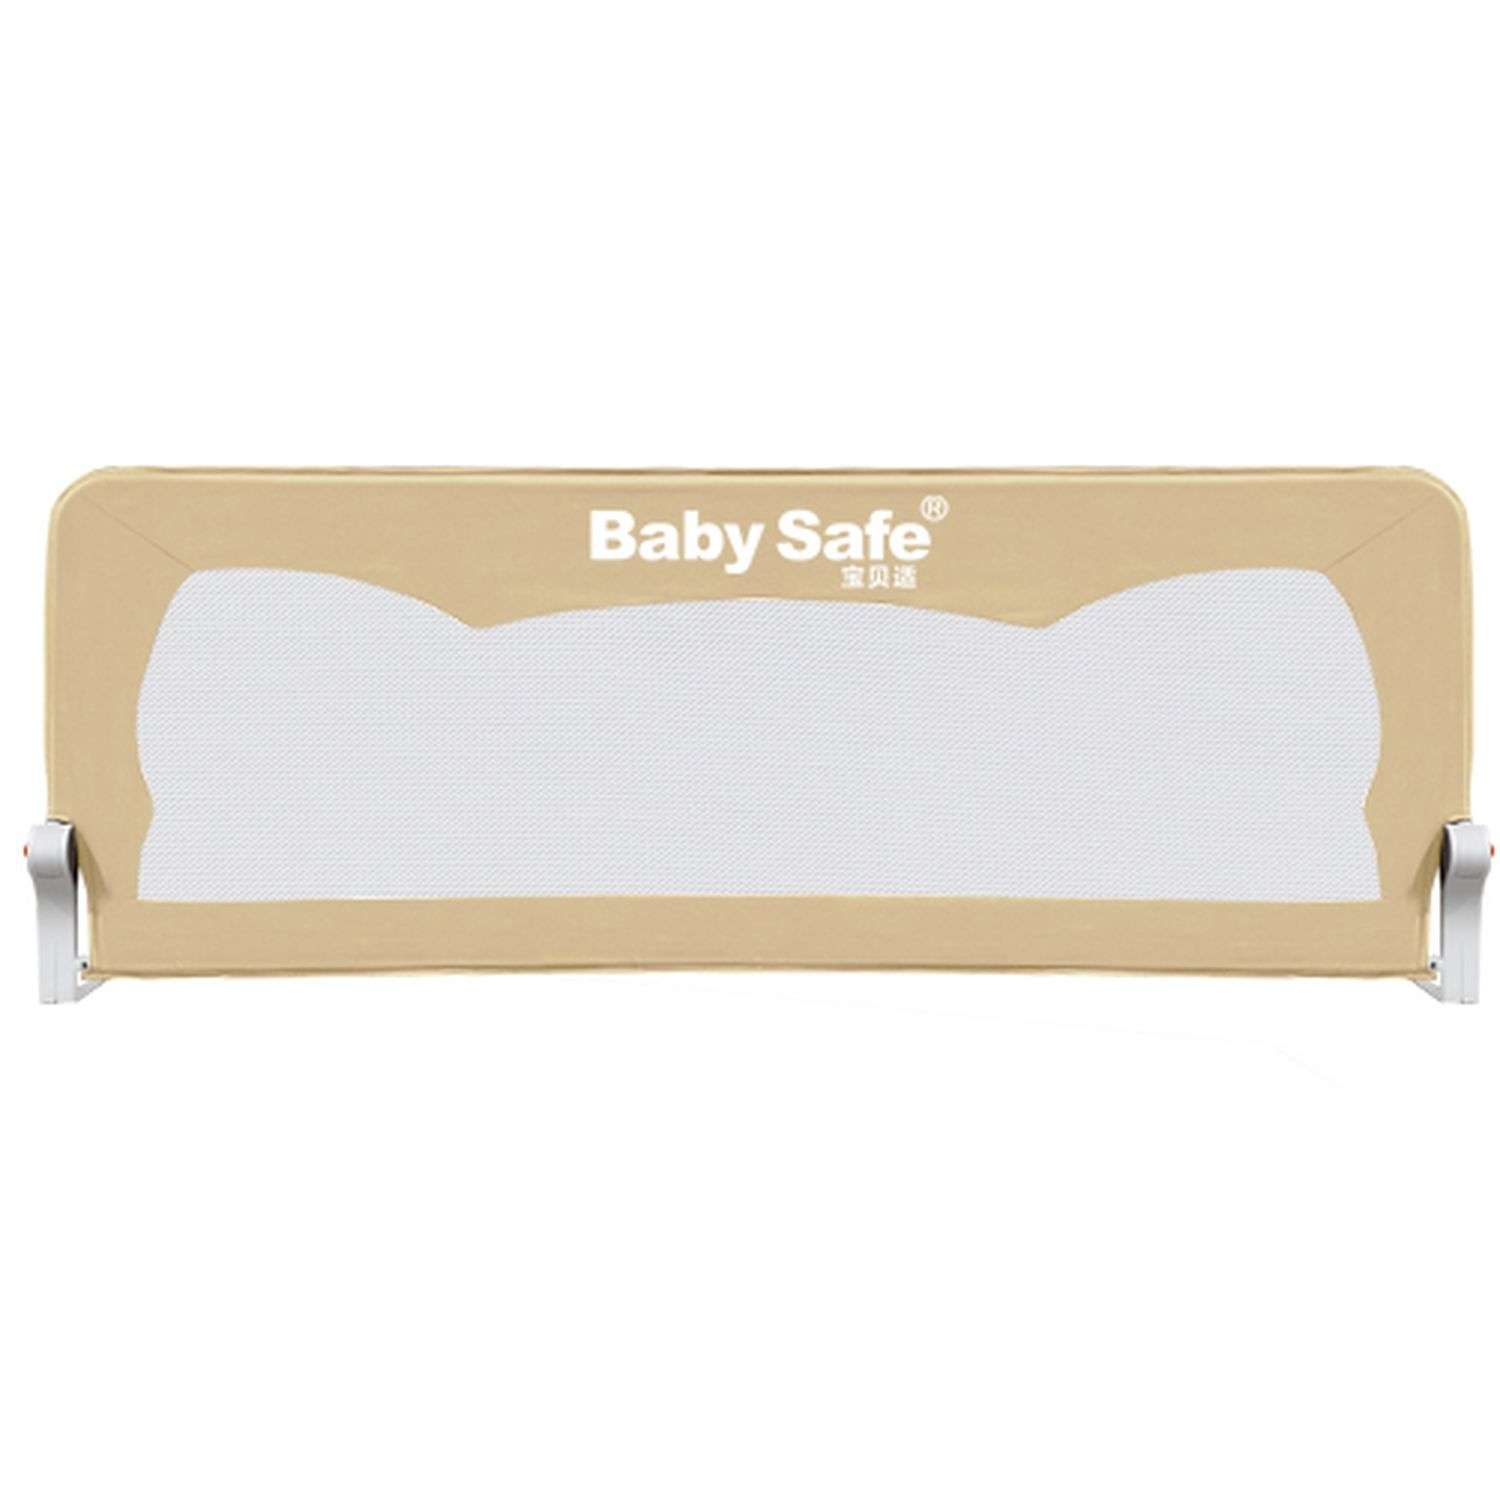 Барьер защитный для кровати Baby Safe защитный для кровати Ушки 120х42 бежевый - фото 2